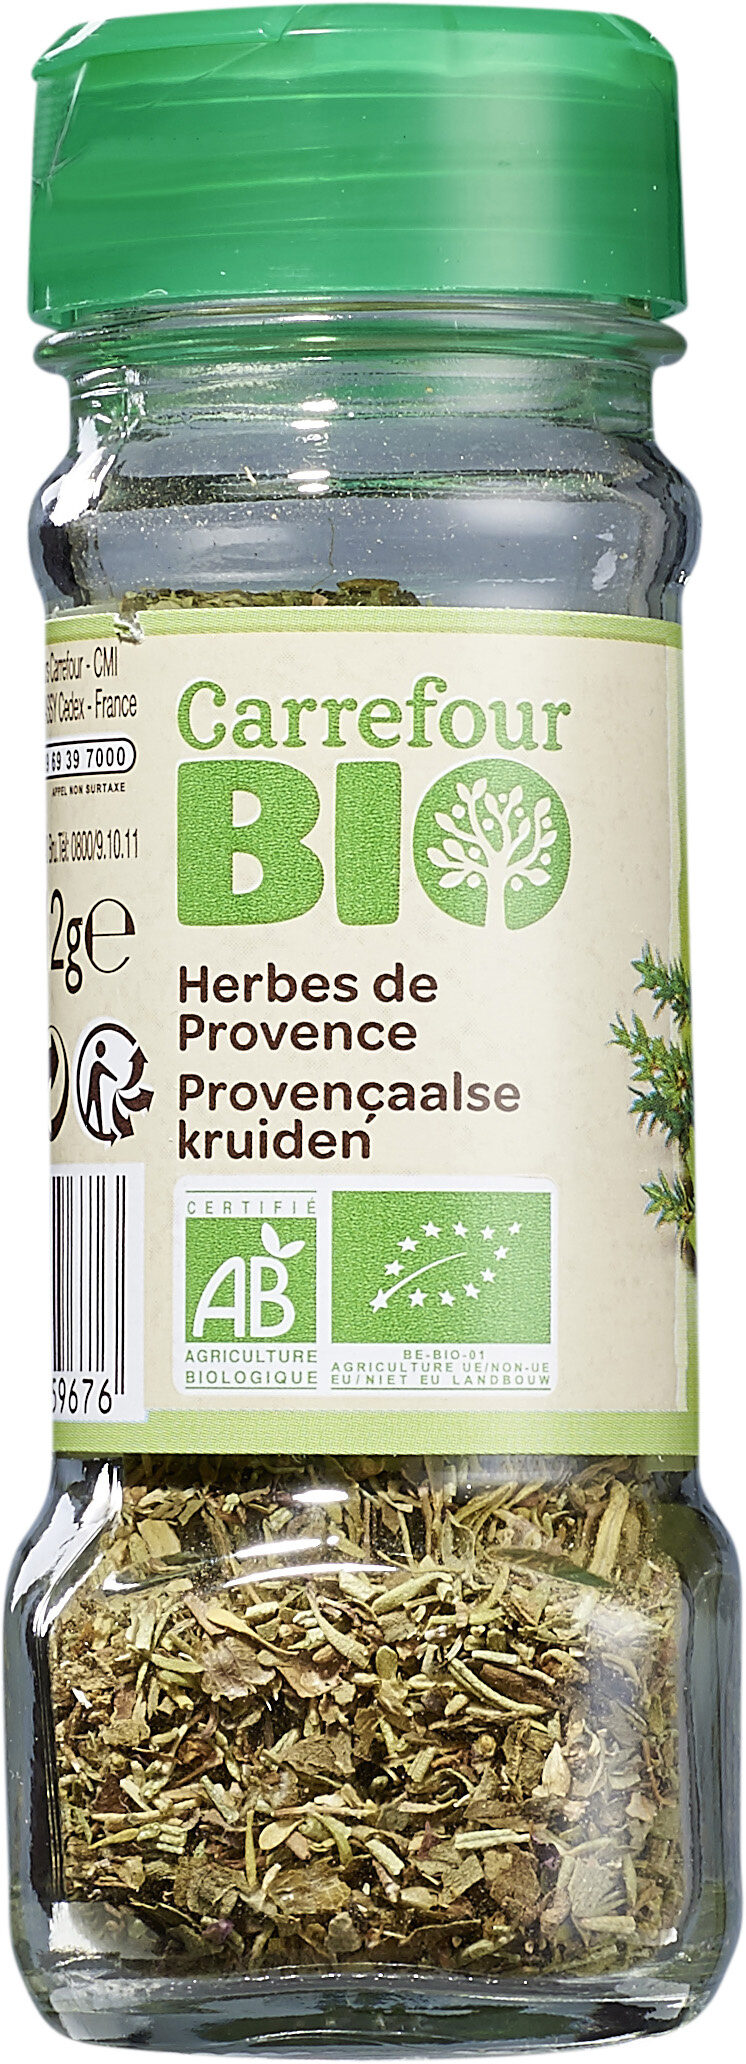 Herbes de Provence bio - Product - fr